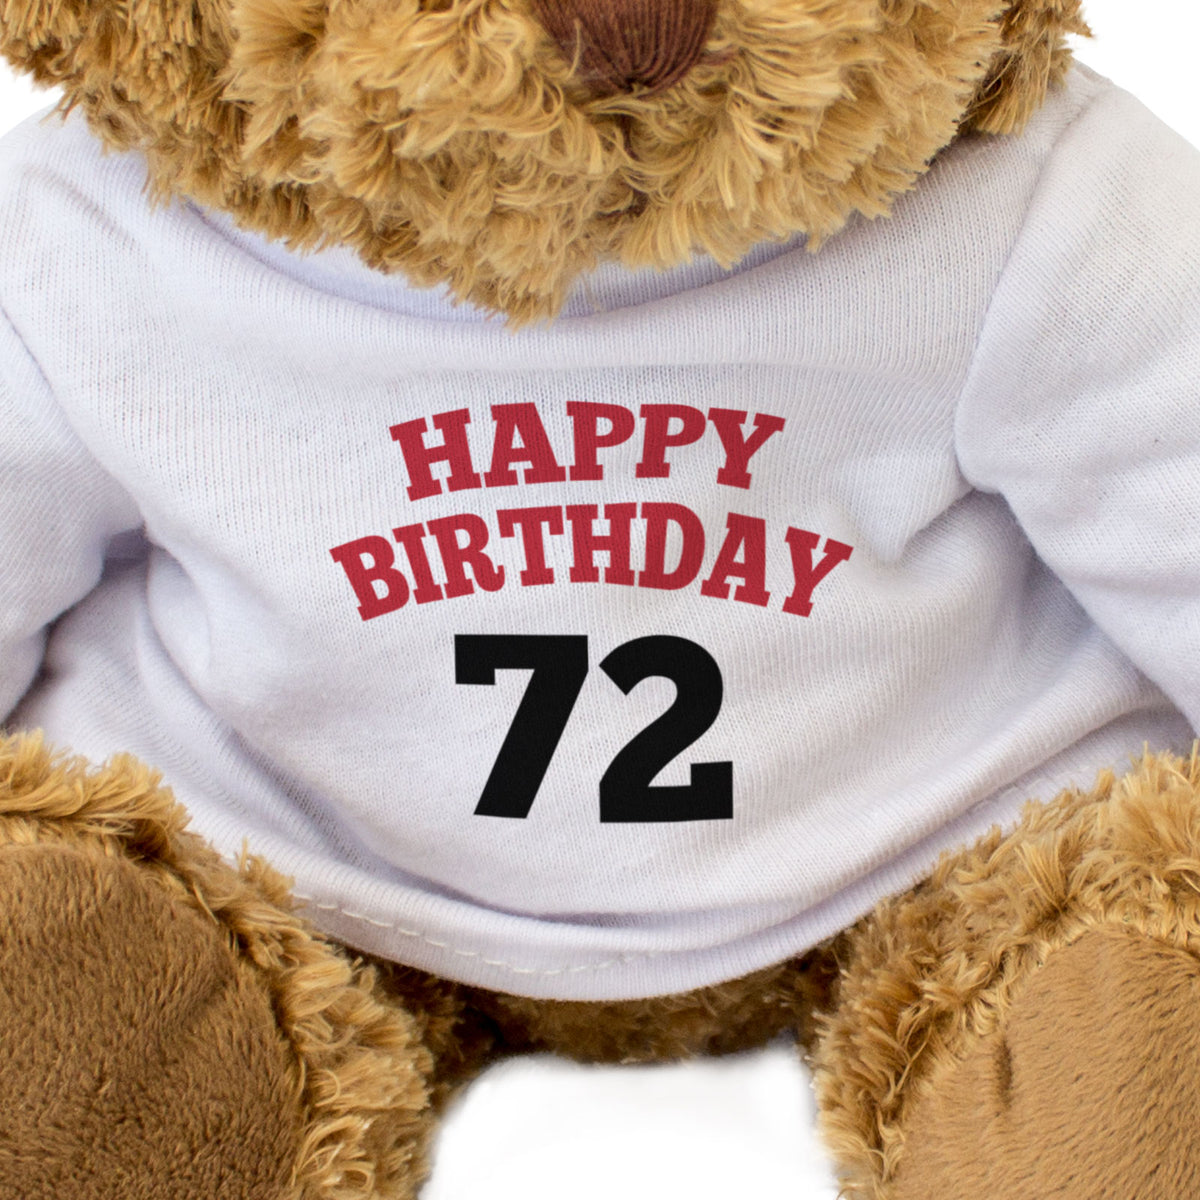 Happy Birthday 72 - Teddy Bear